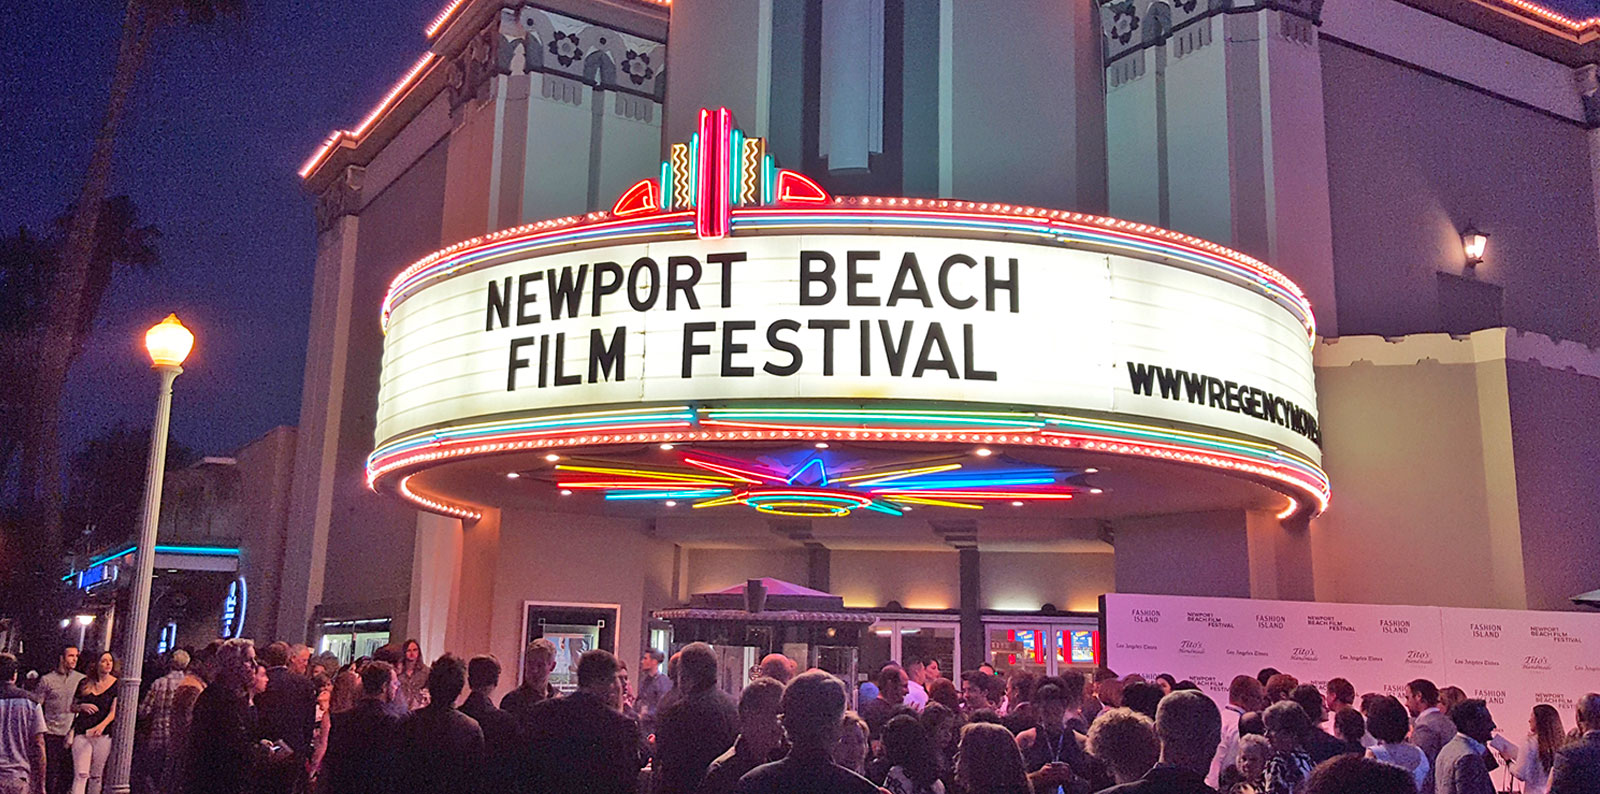 Newport Beach Film Festival is an irresistible temptation